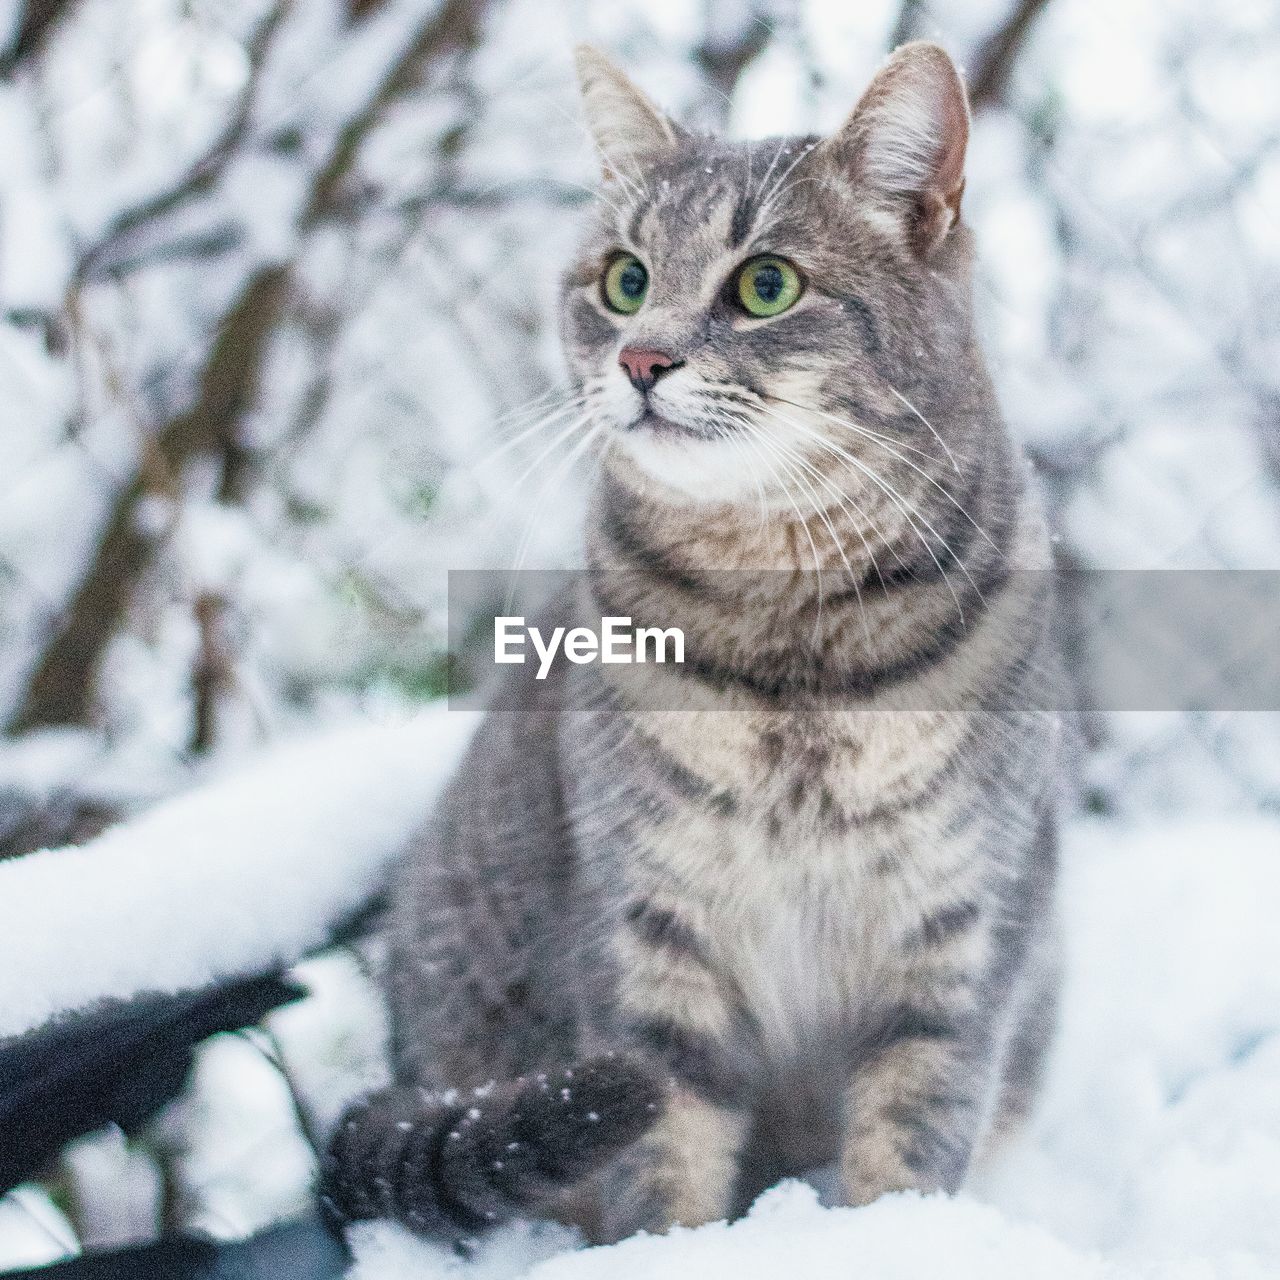 CAT LOOKING AWAY IN SNOW FIELD